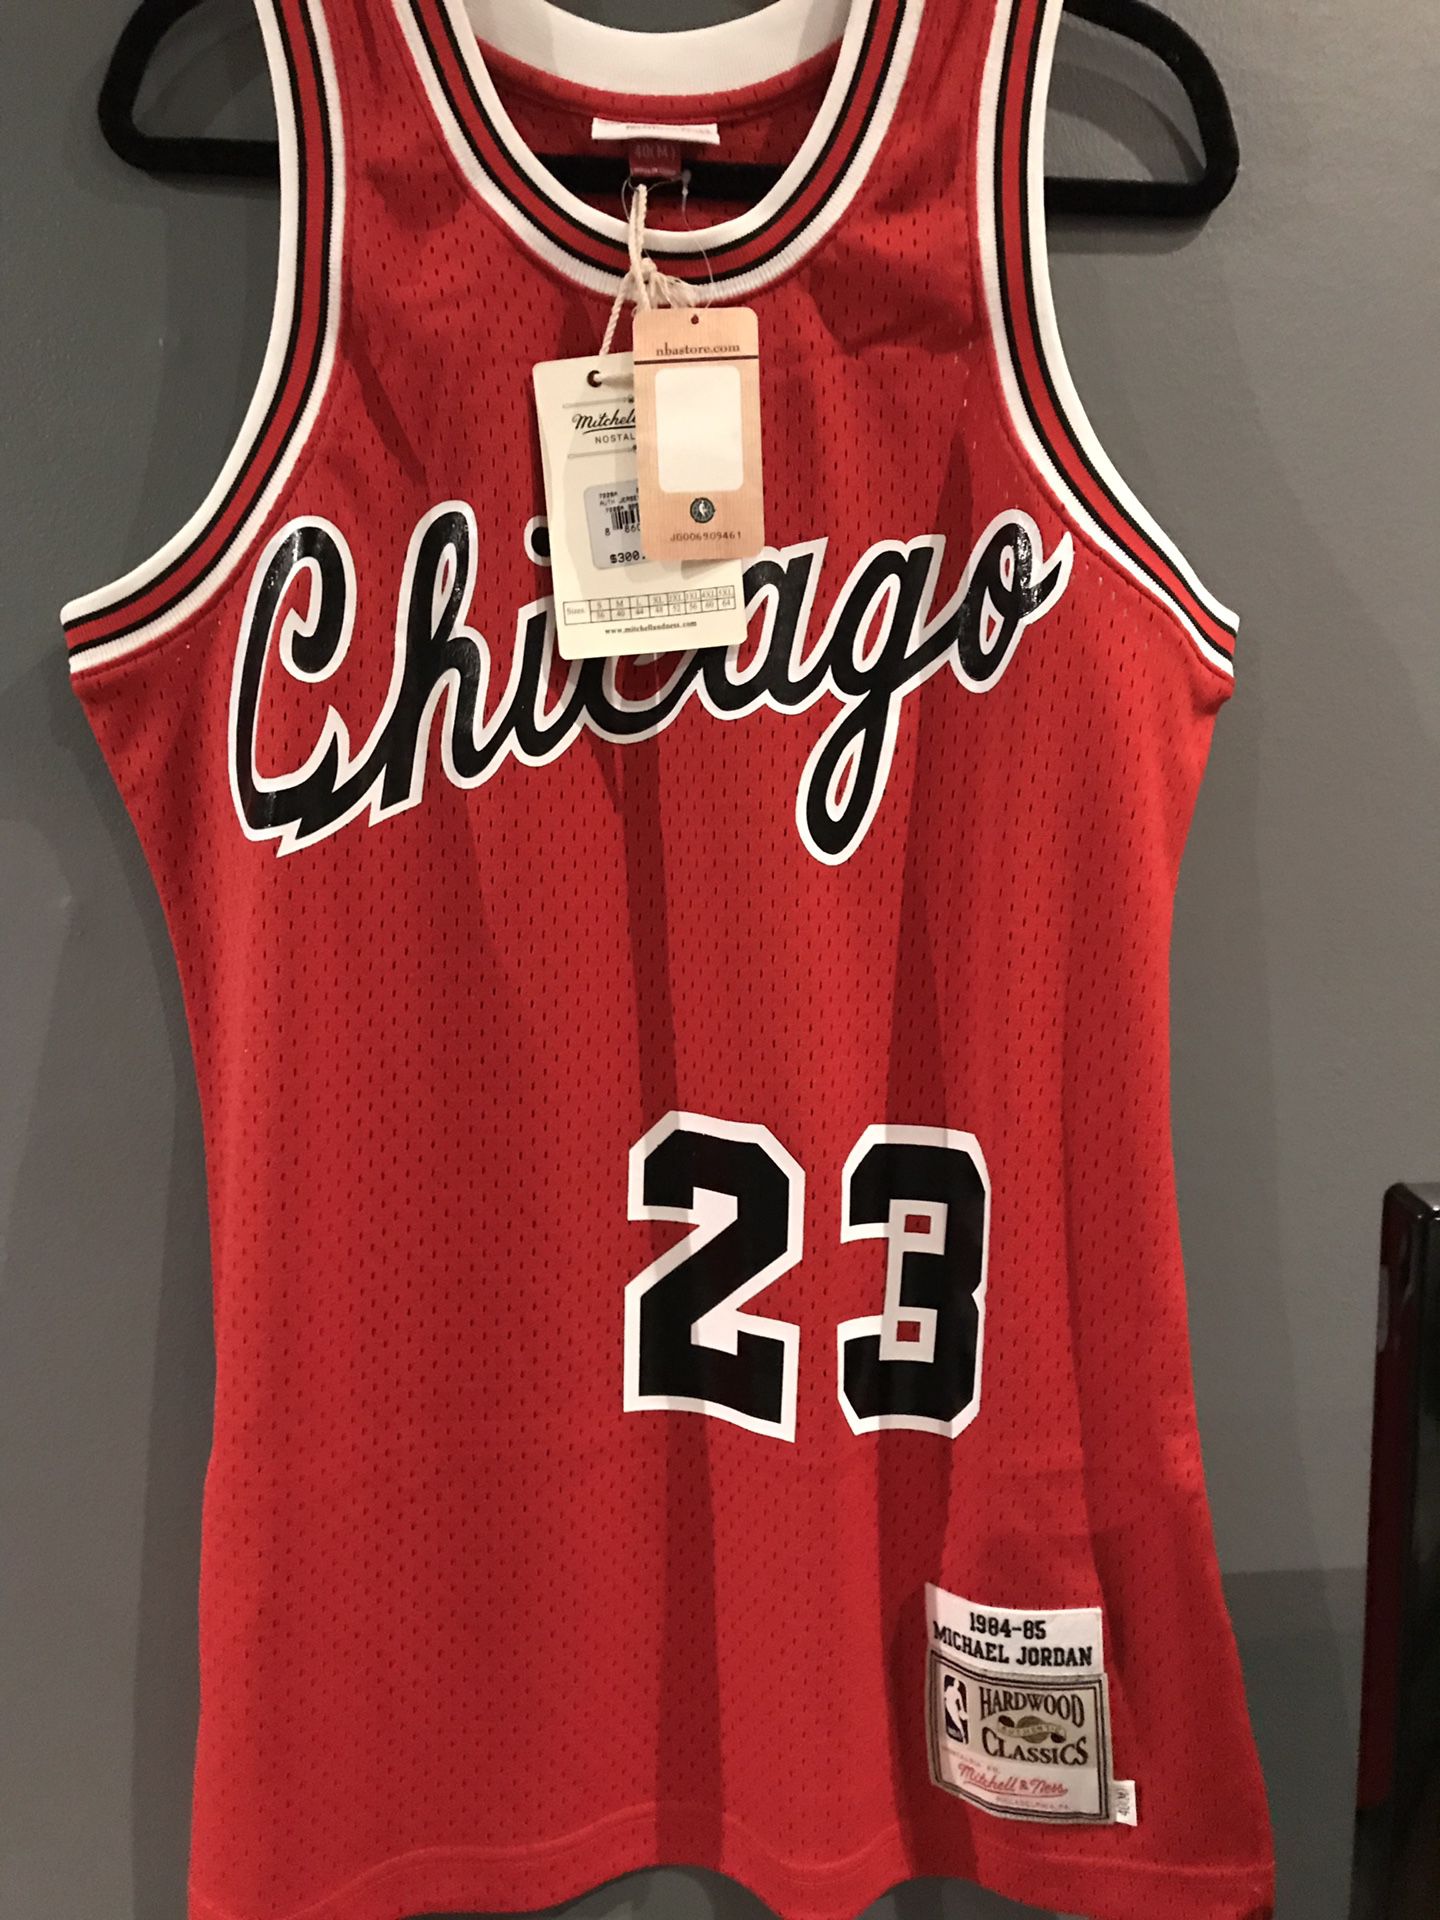 Hardwood Classics Michael Jordan Chicago Bulls Jersey 1984-85 Size